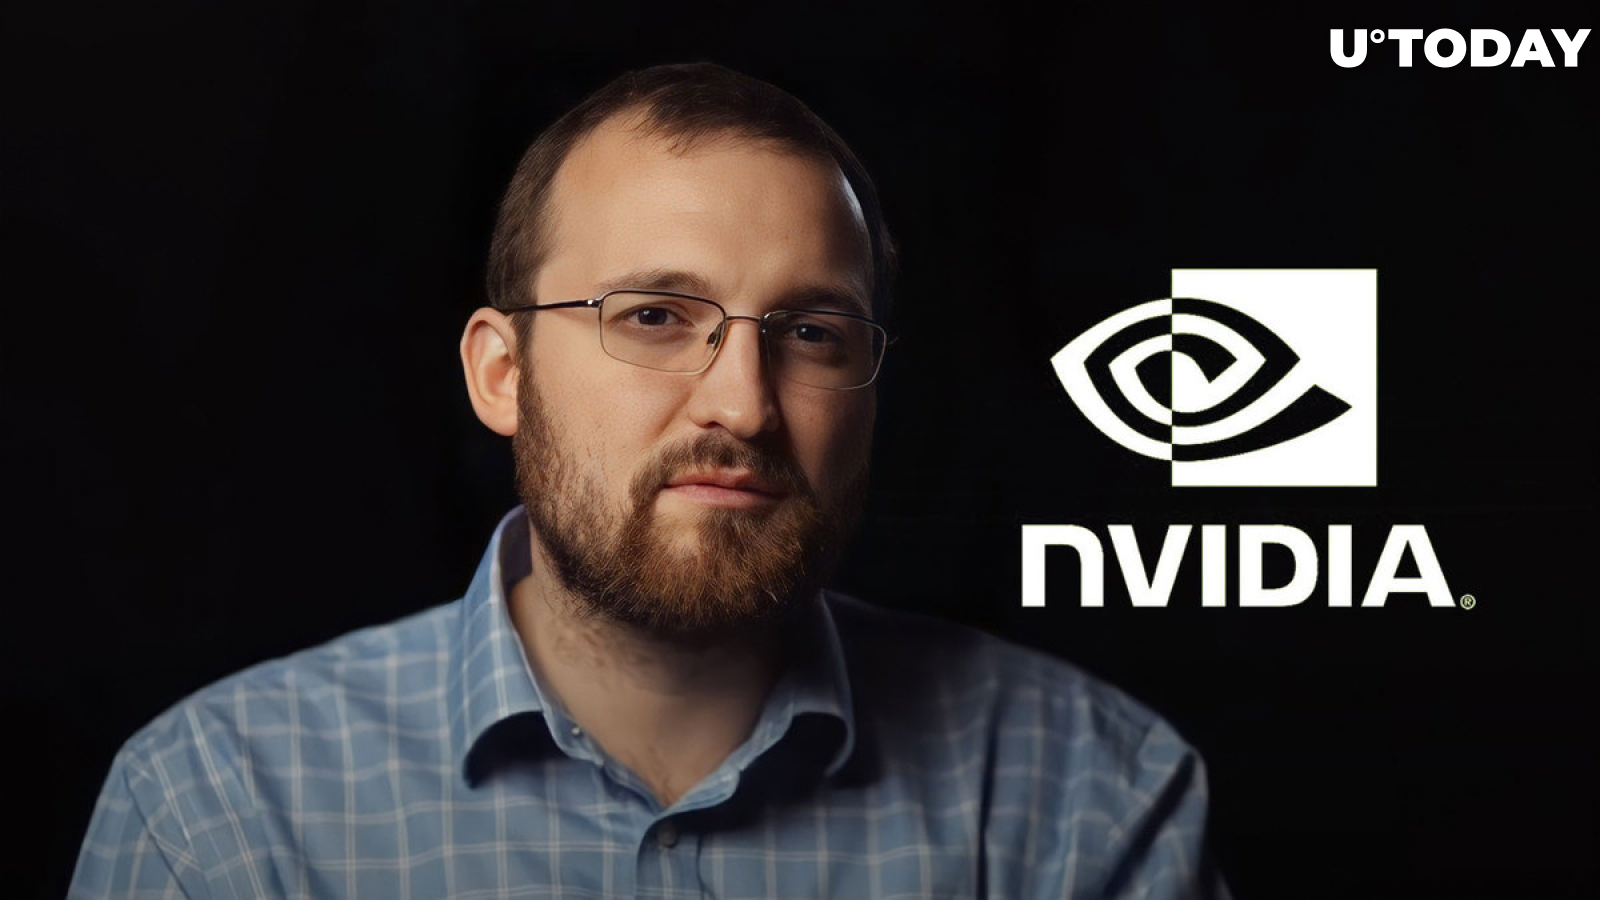 Cardano Founder Responds to Idea of Hiring Autistic 'Nvidia Hacker'